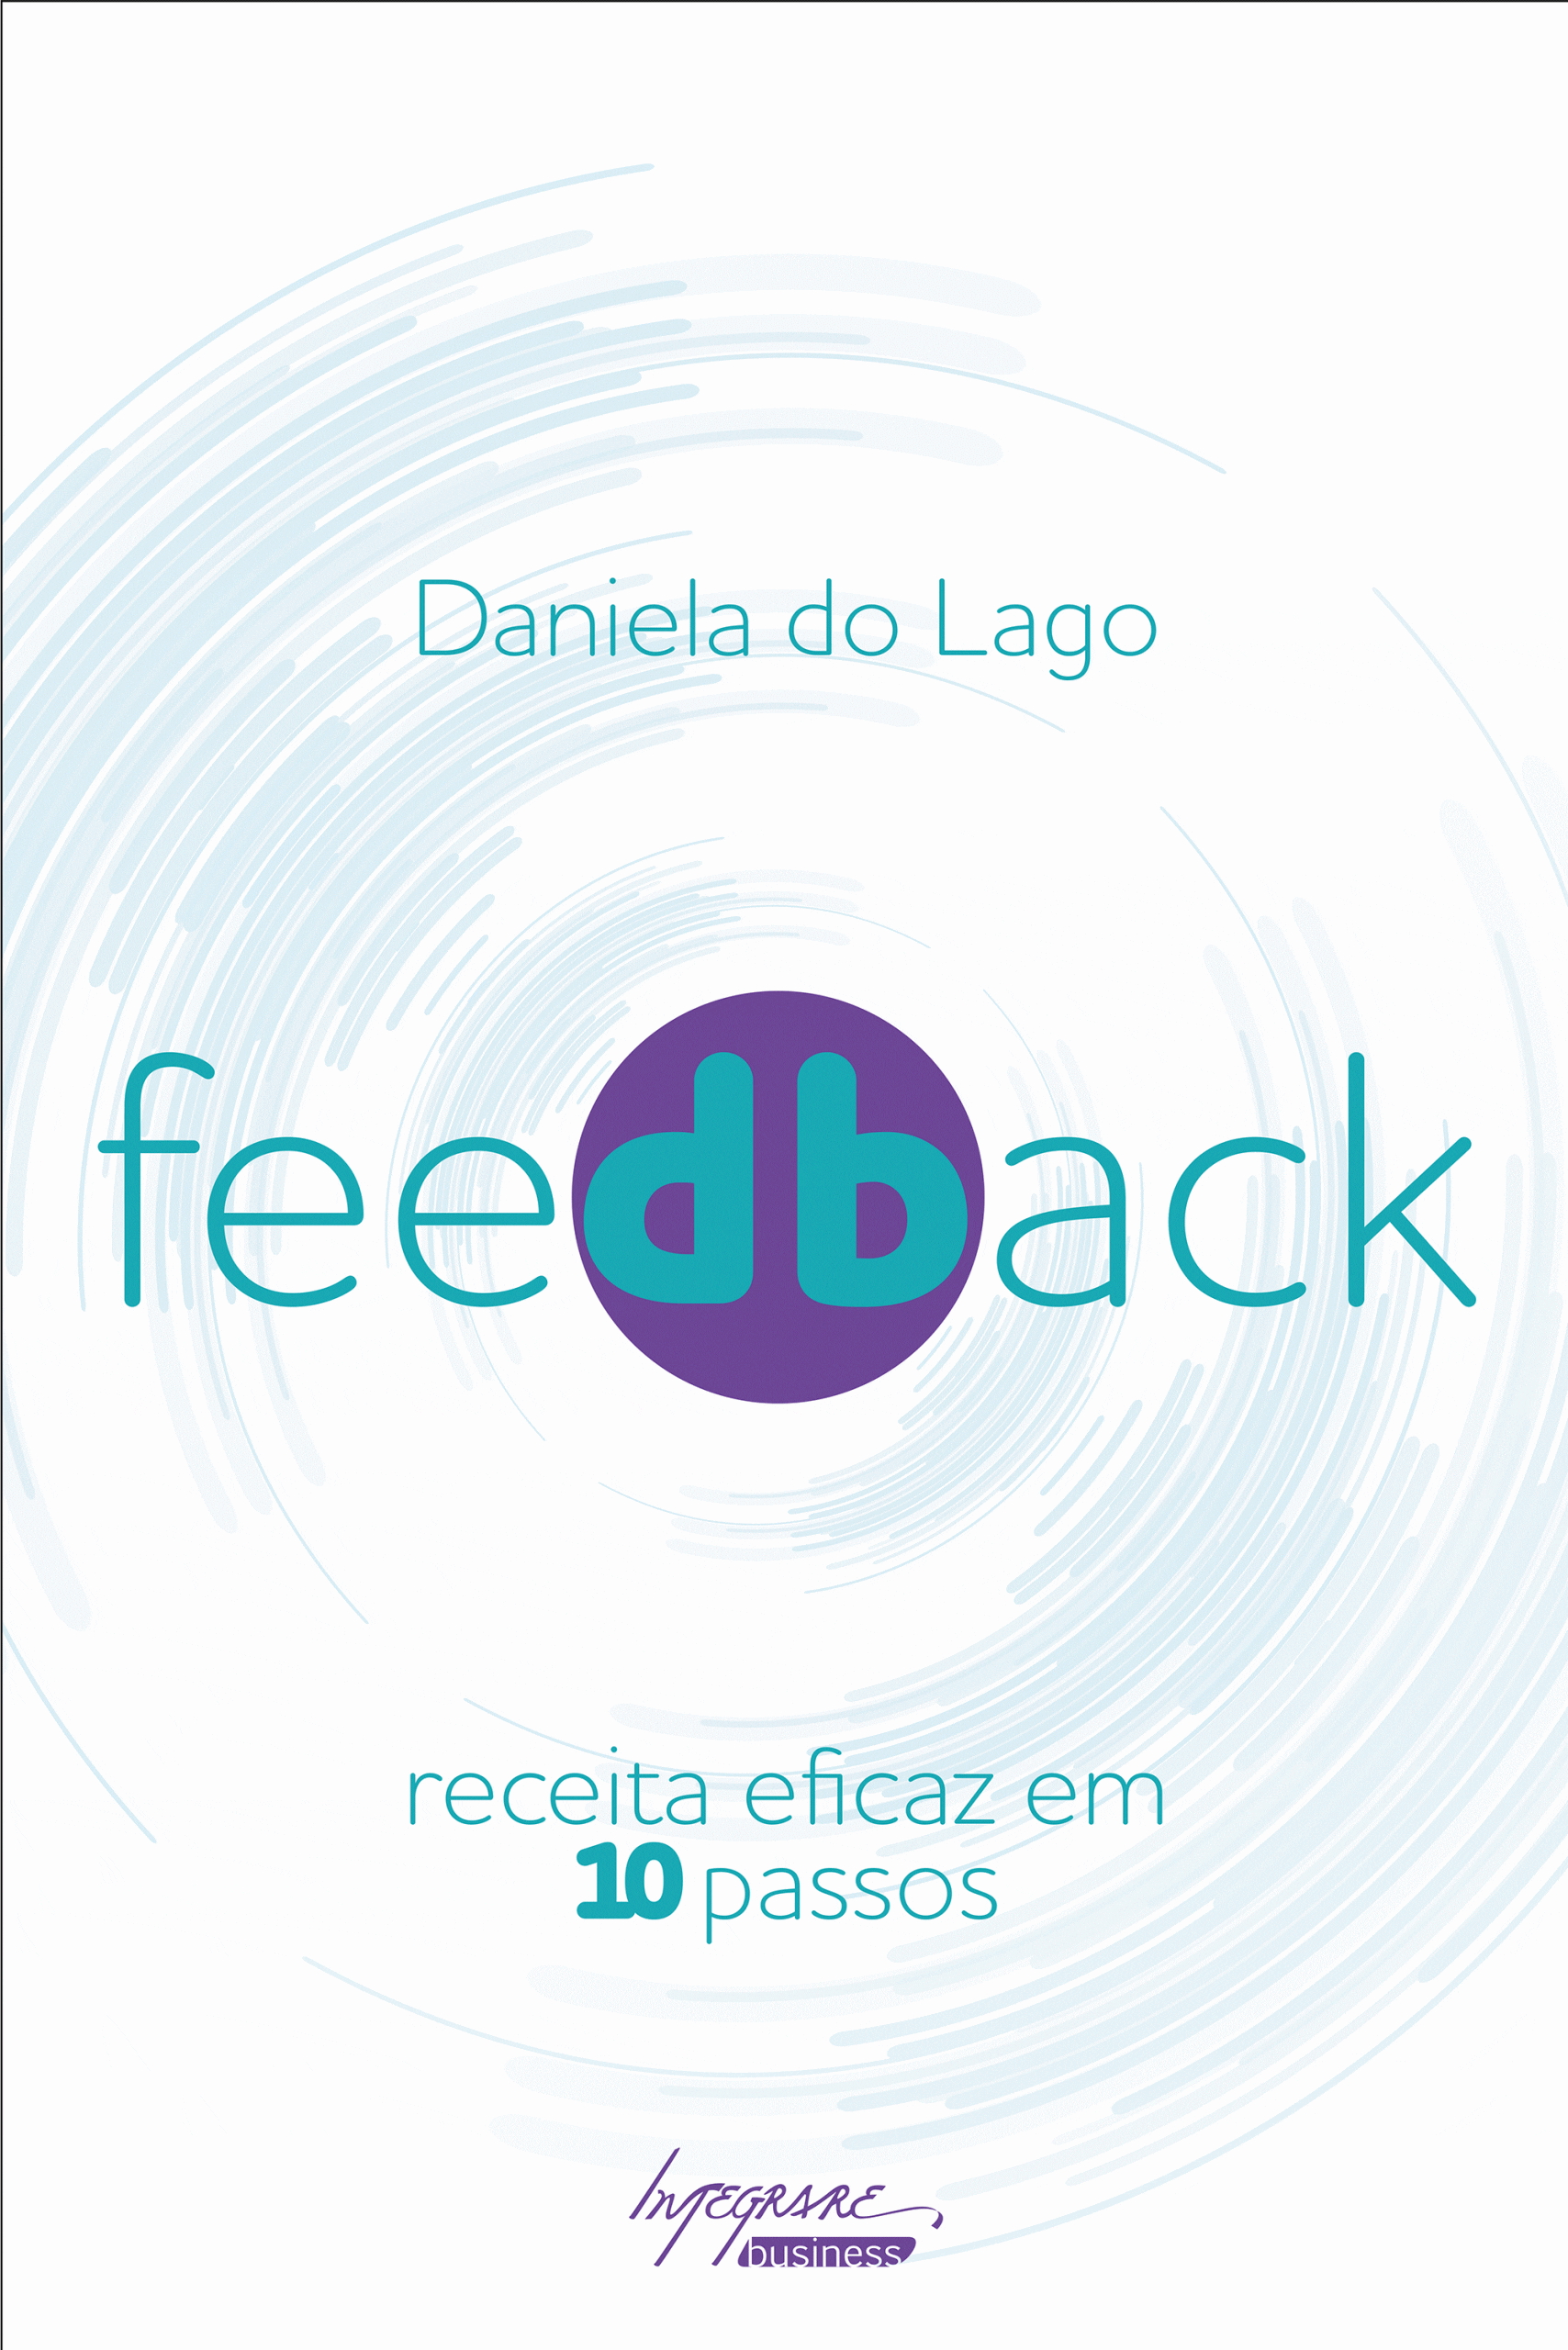 Capa do Livro Feedback de Daniela do Lago para a editora Integrare.